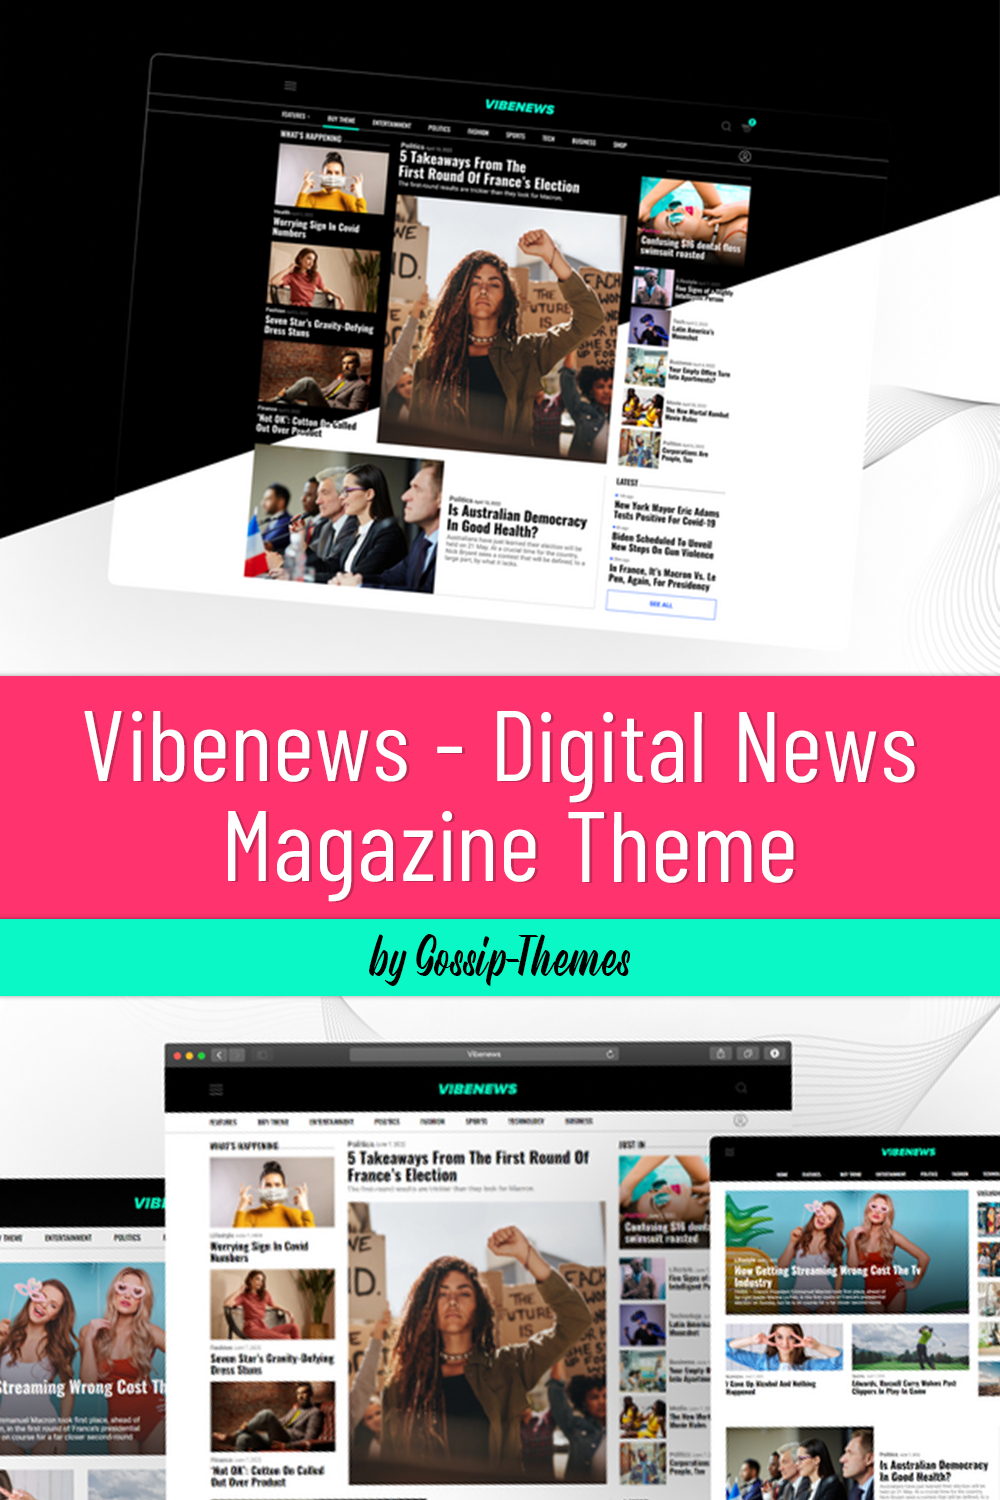 Pinterest of vibenews digital news magazine theme.